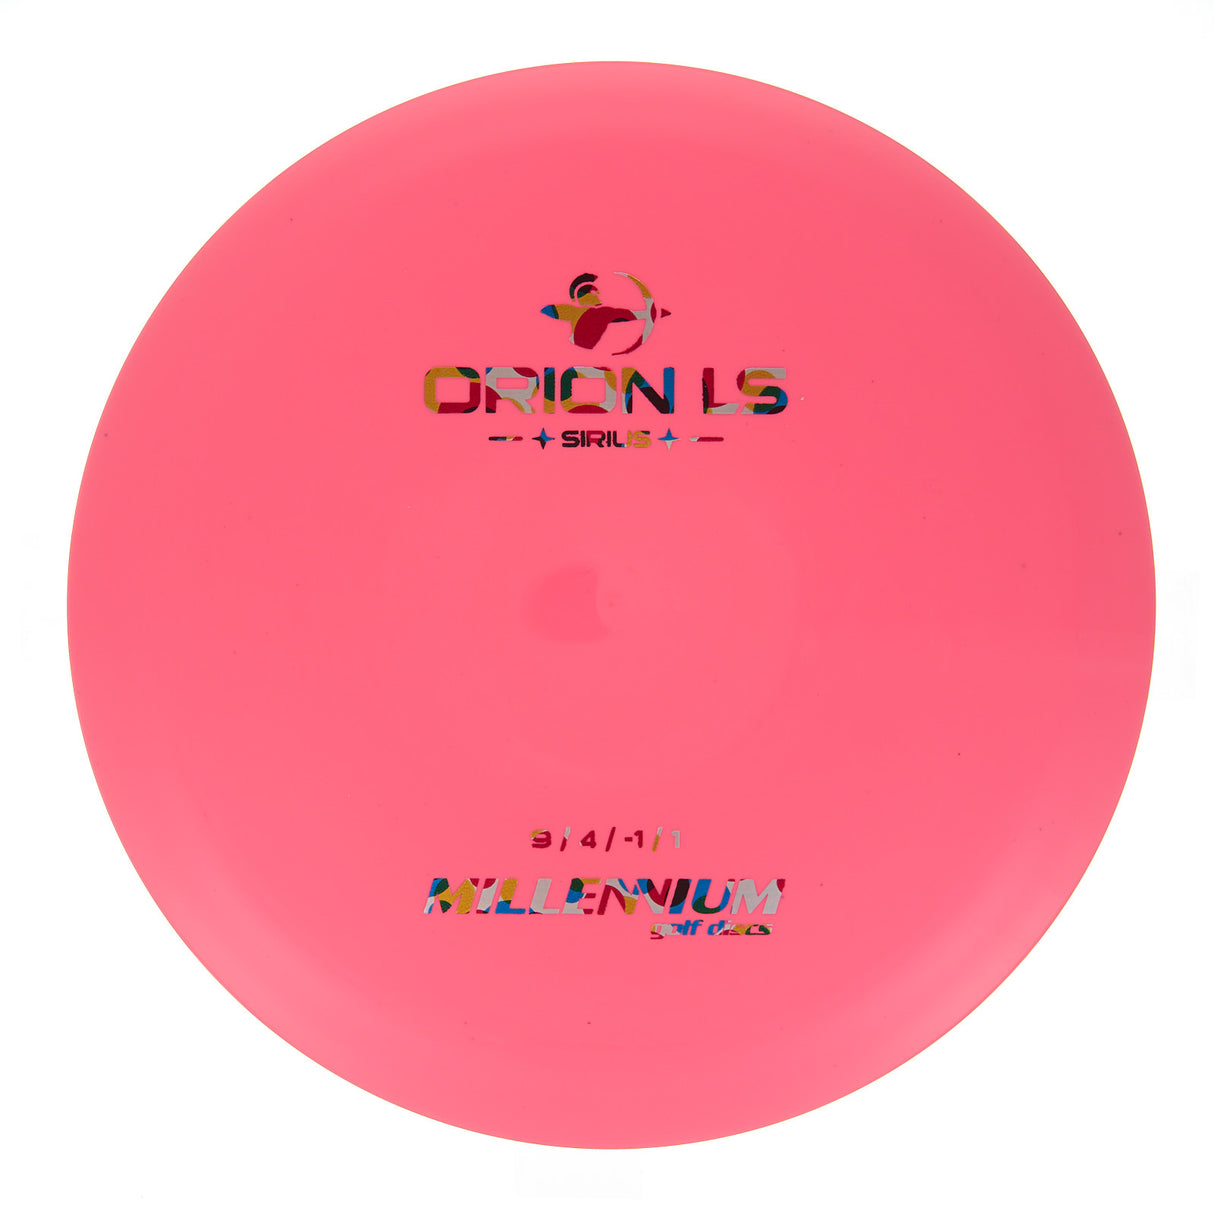 Millennium Orion LS - Sirius 171g | Style 0001